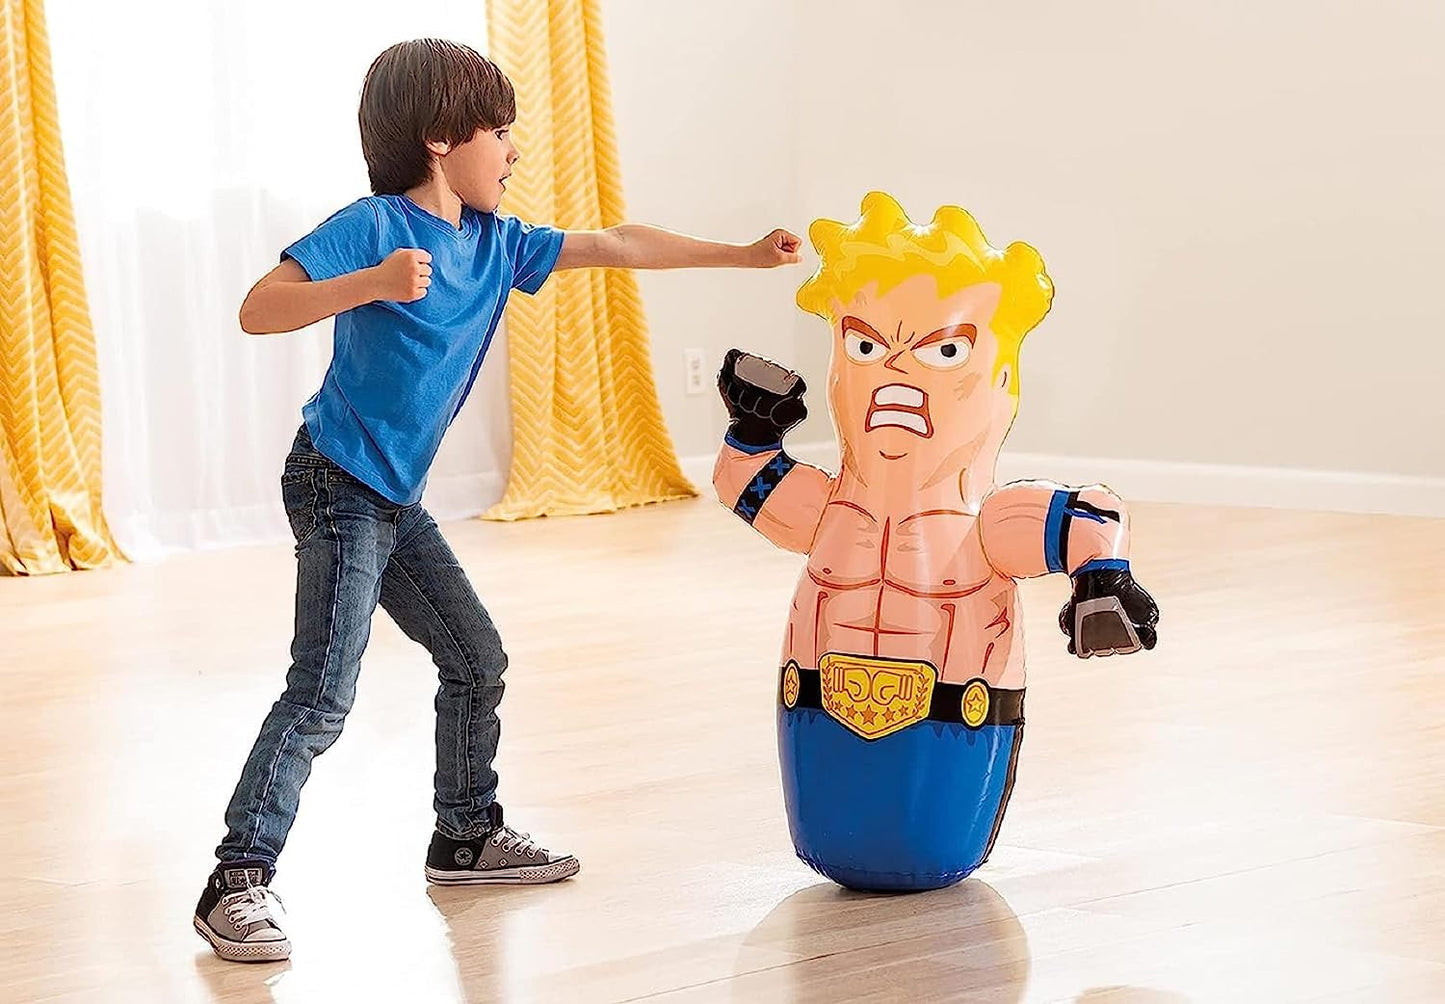 Intex Bob Punching Bag for Kids 3D Inflatable PVC Toy